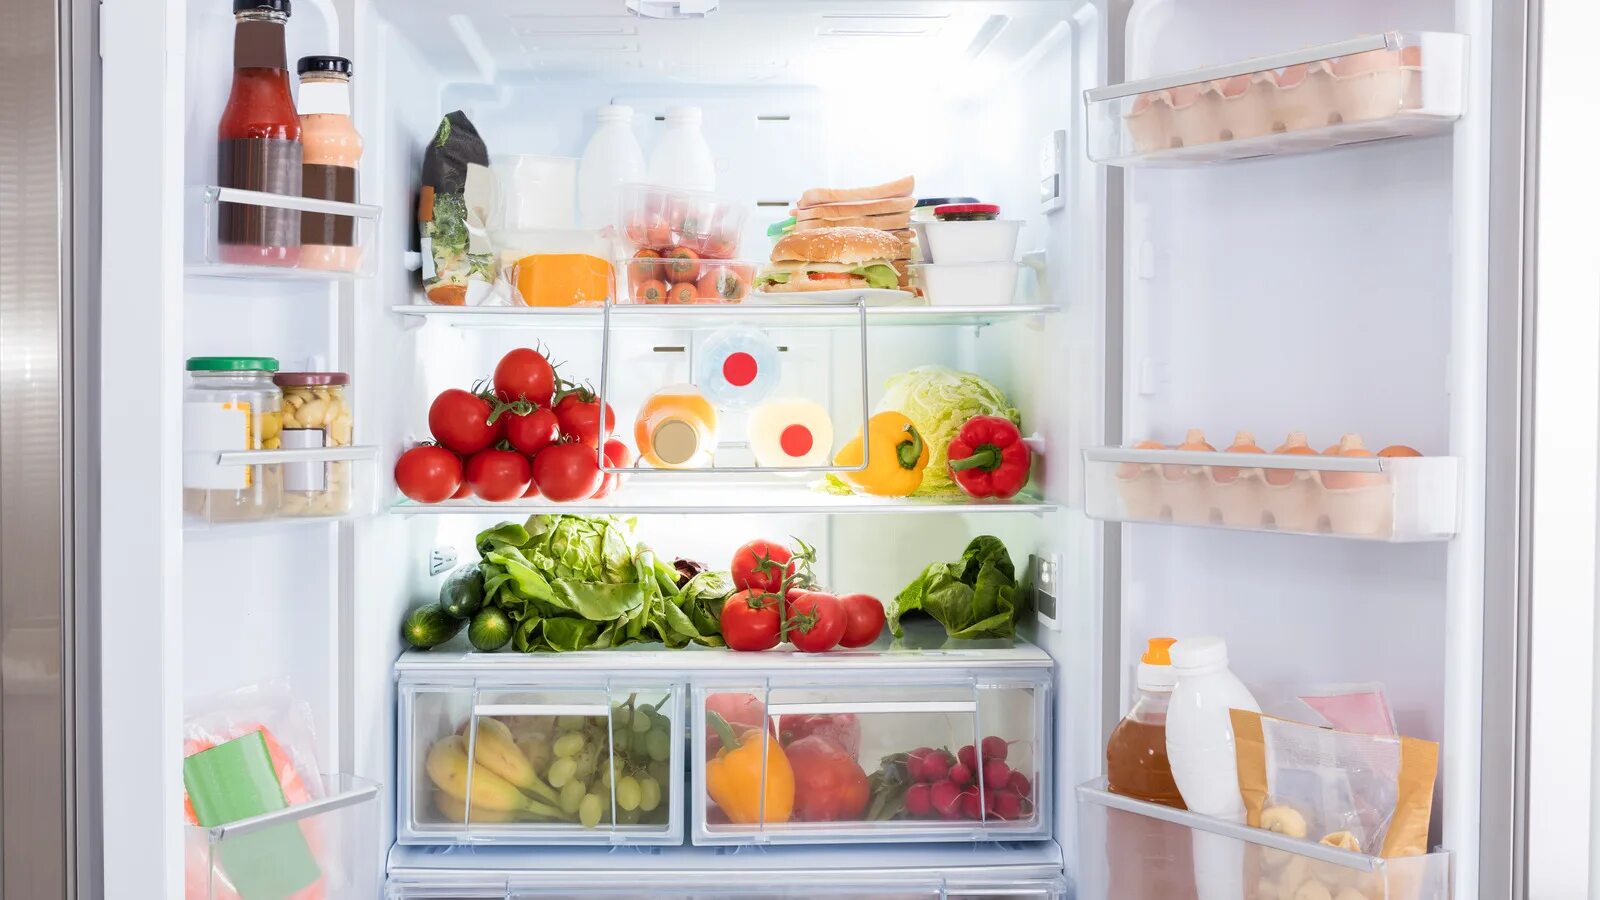 Холодильник с продуктами. Открытый холодильник. [Jkjlbkmybr c ghjkernfvb. Открытый холодильник с едой. There are some tomatoes in the fridge